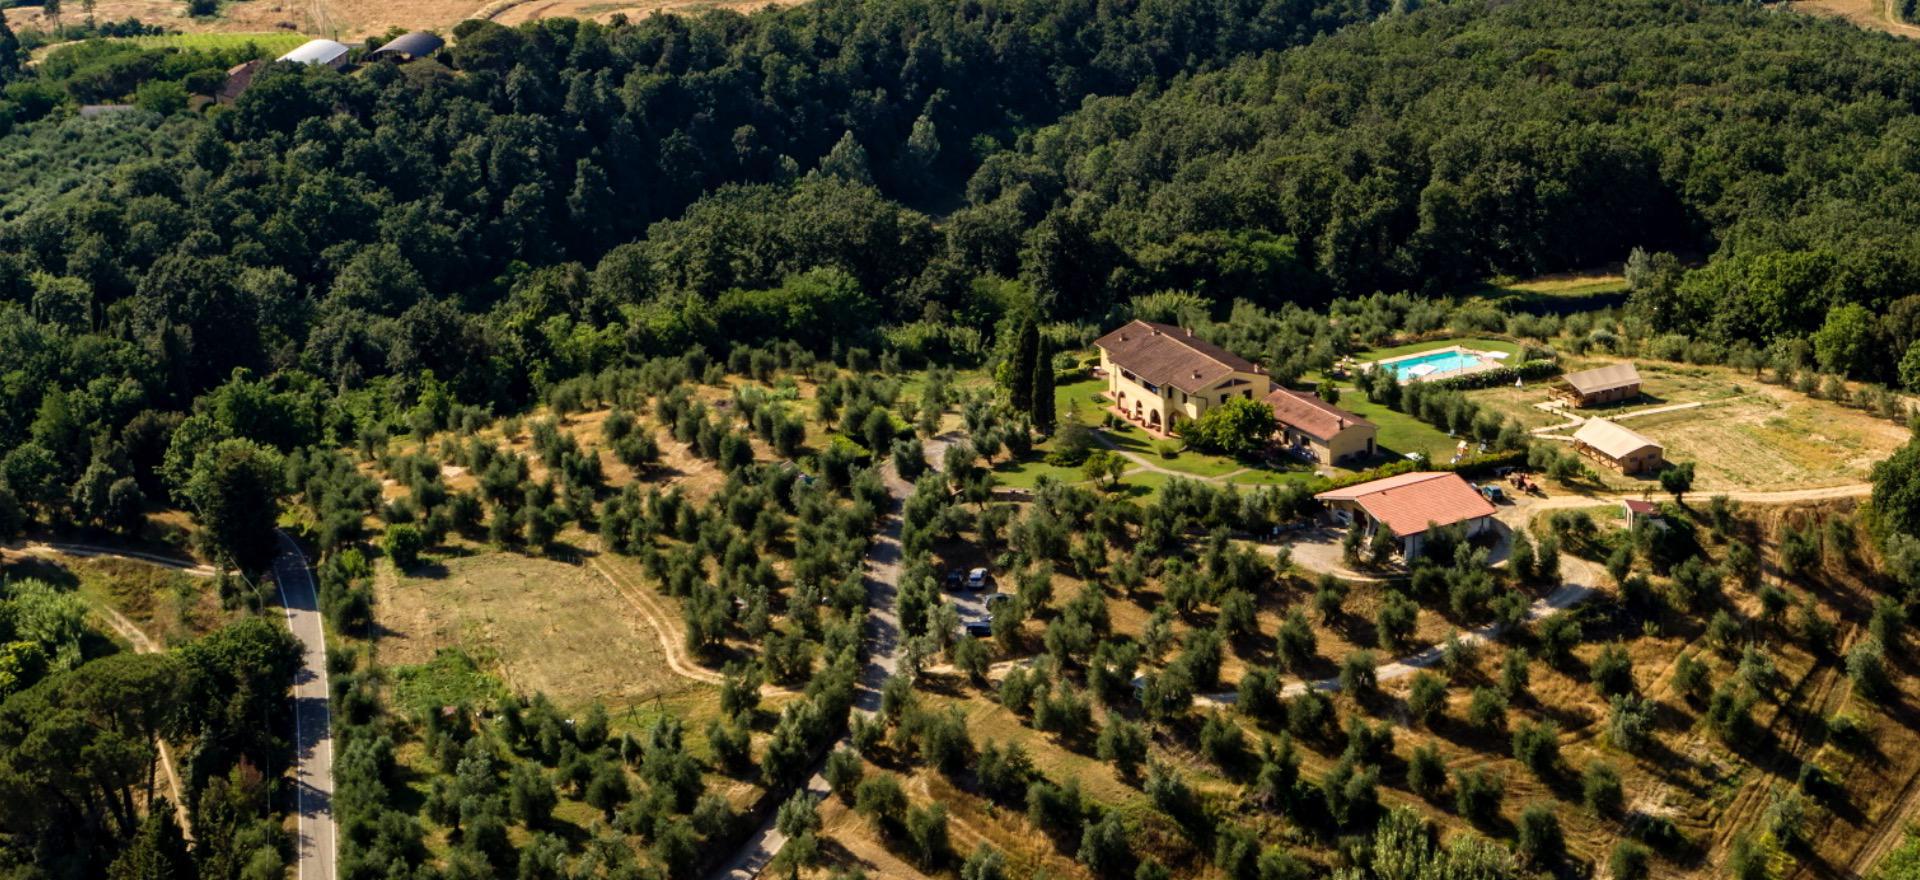 Agriturismo Toscane Rustige agriturismo tussen de wijngaarden in Toscane